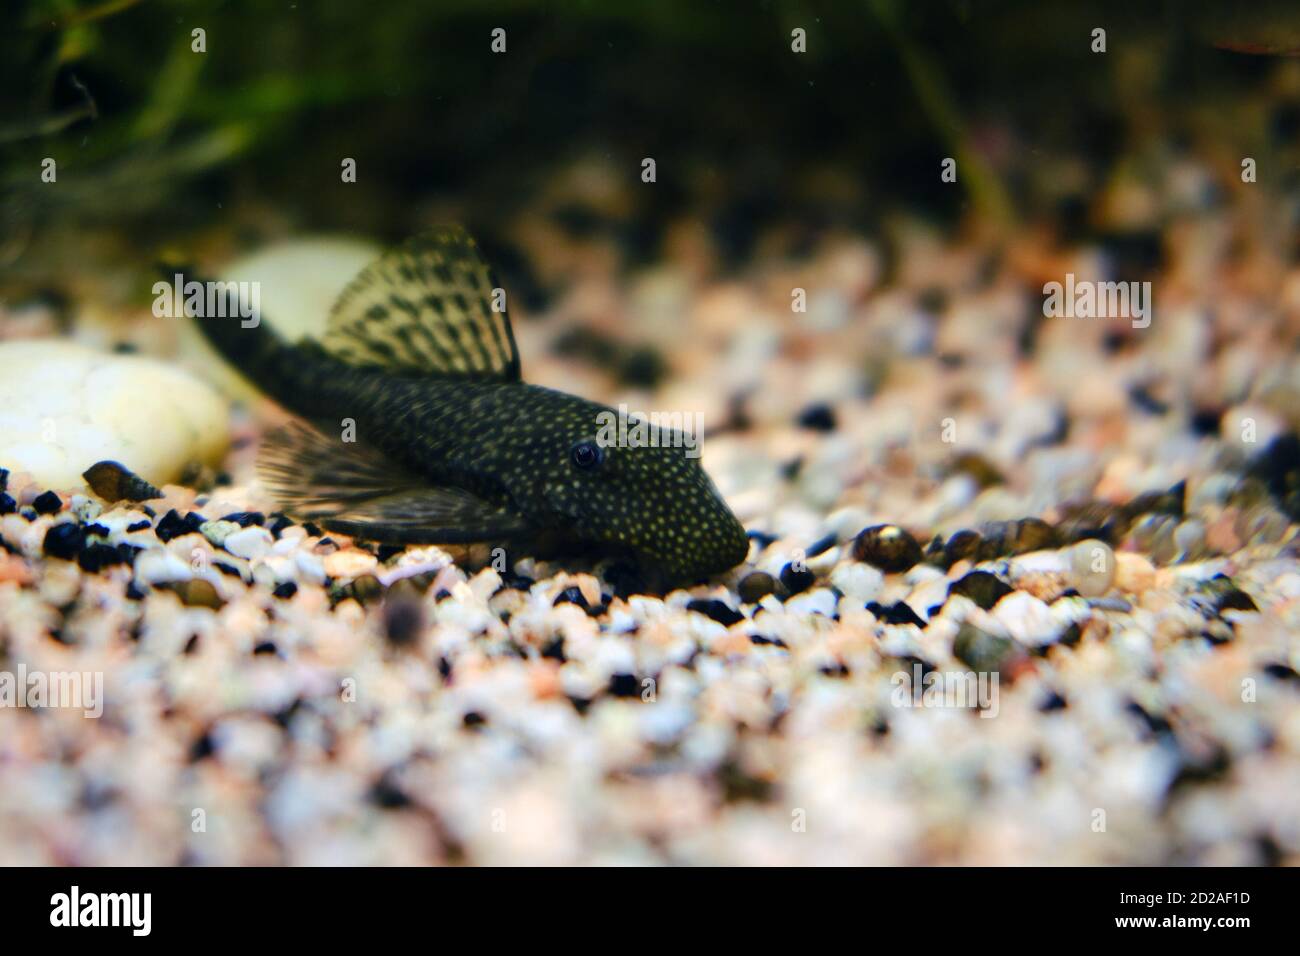 Catfish lying at the bottom of the aquarium of small stones, close-up Stock Photo